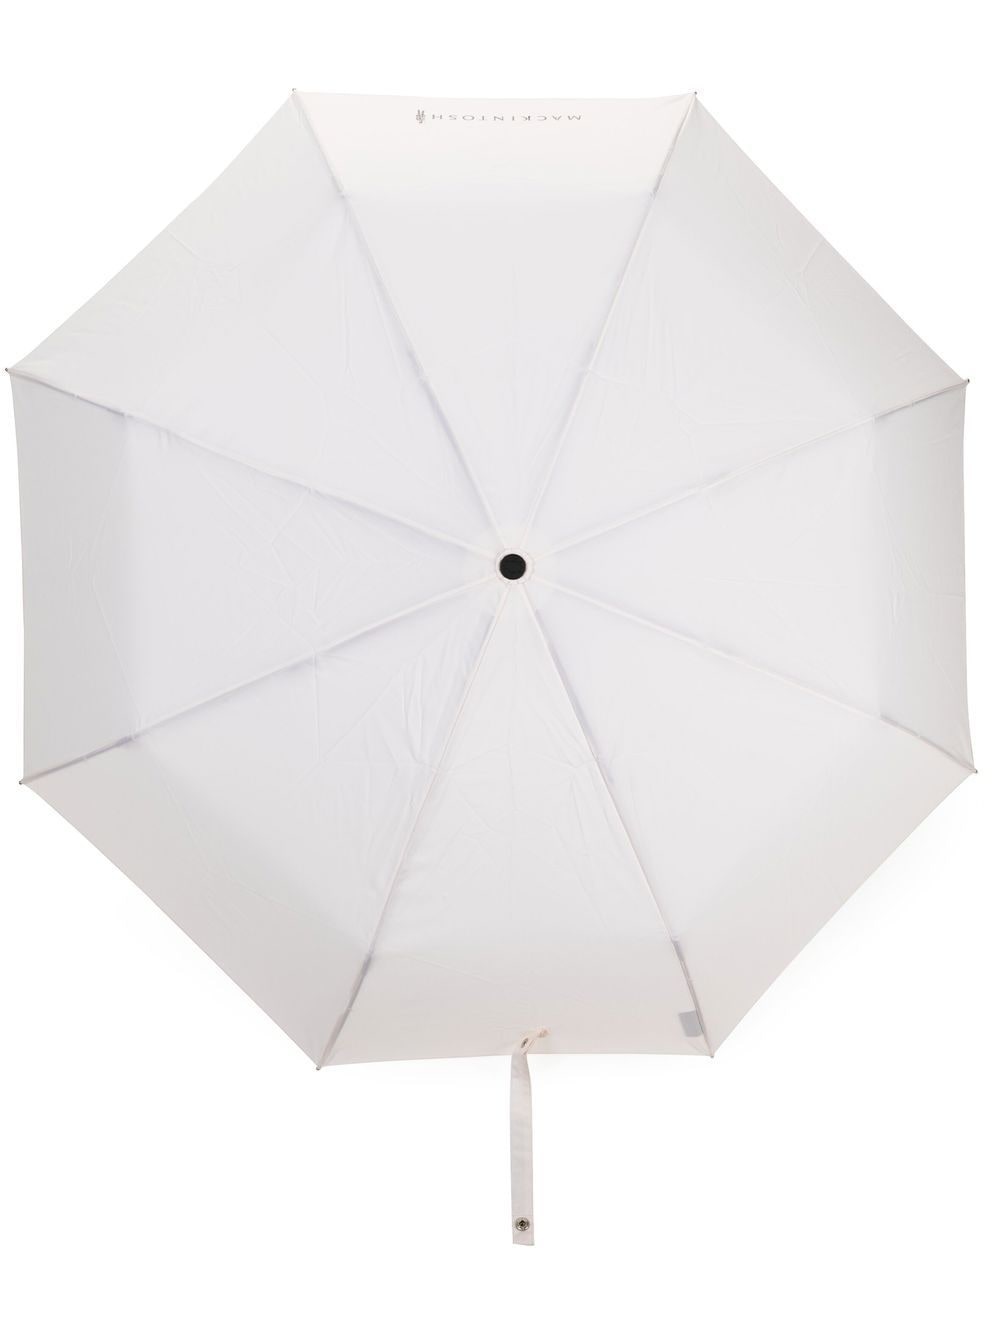 Ayr automatic telescopic umbrella - 1